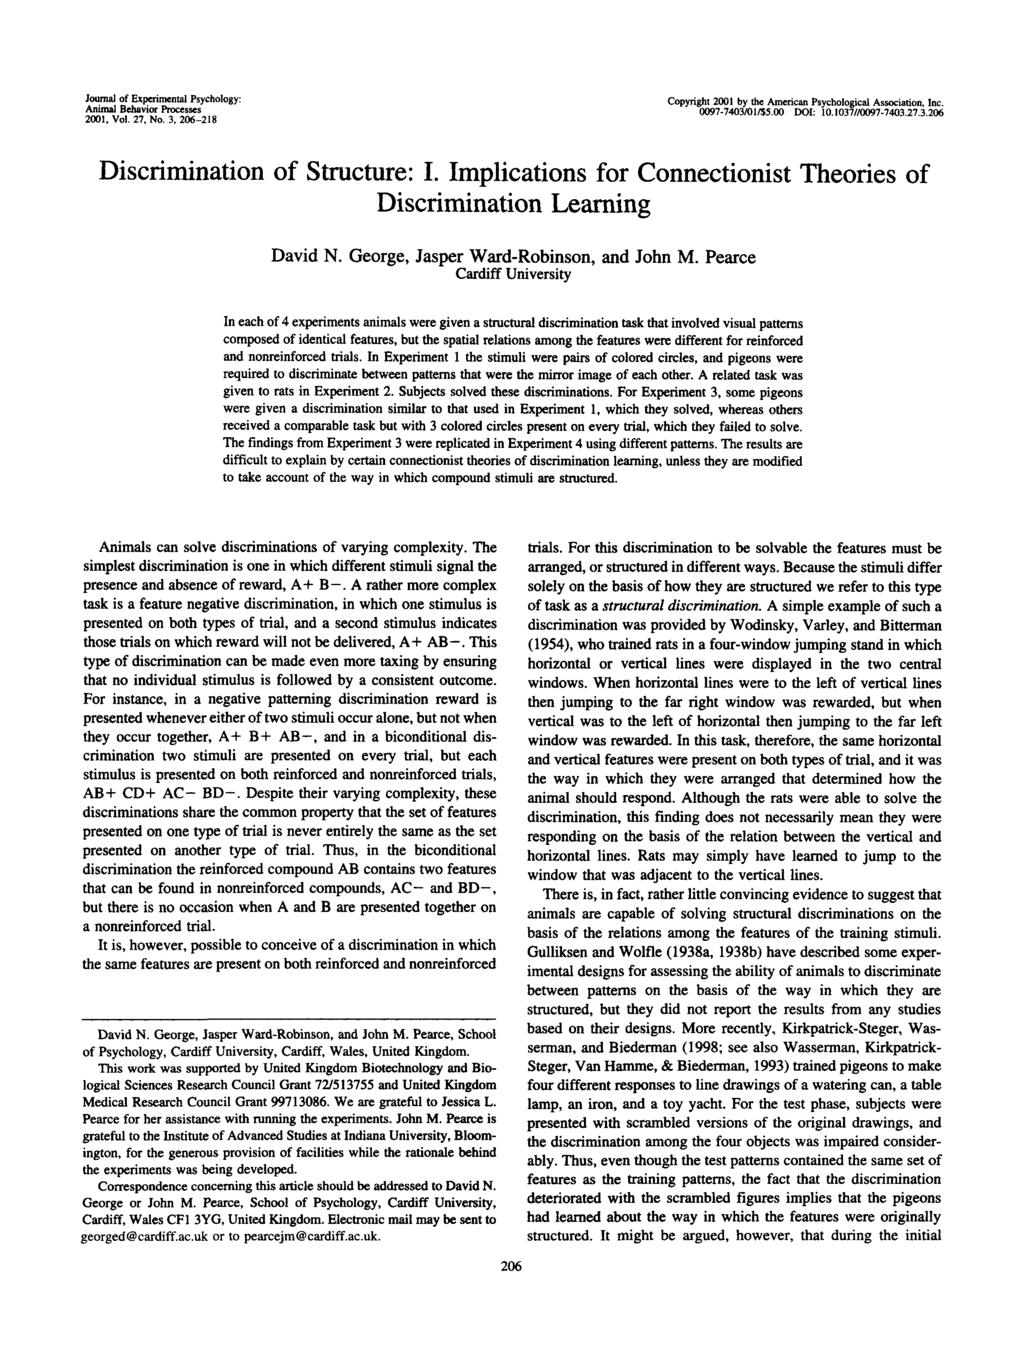 Journal of Experimental Psychology: Animal Behavior Processes 2001, Vol. 27, No. 3, 206-218 Copyright 2001 by the American Psychological Association, Inc. 0097-7403/01/$5.00 DOI: 10.1037//0097-7403.